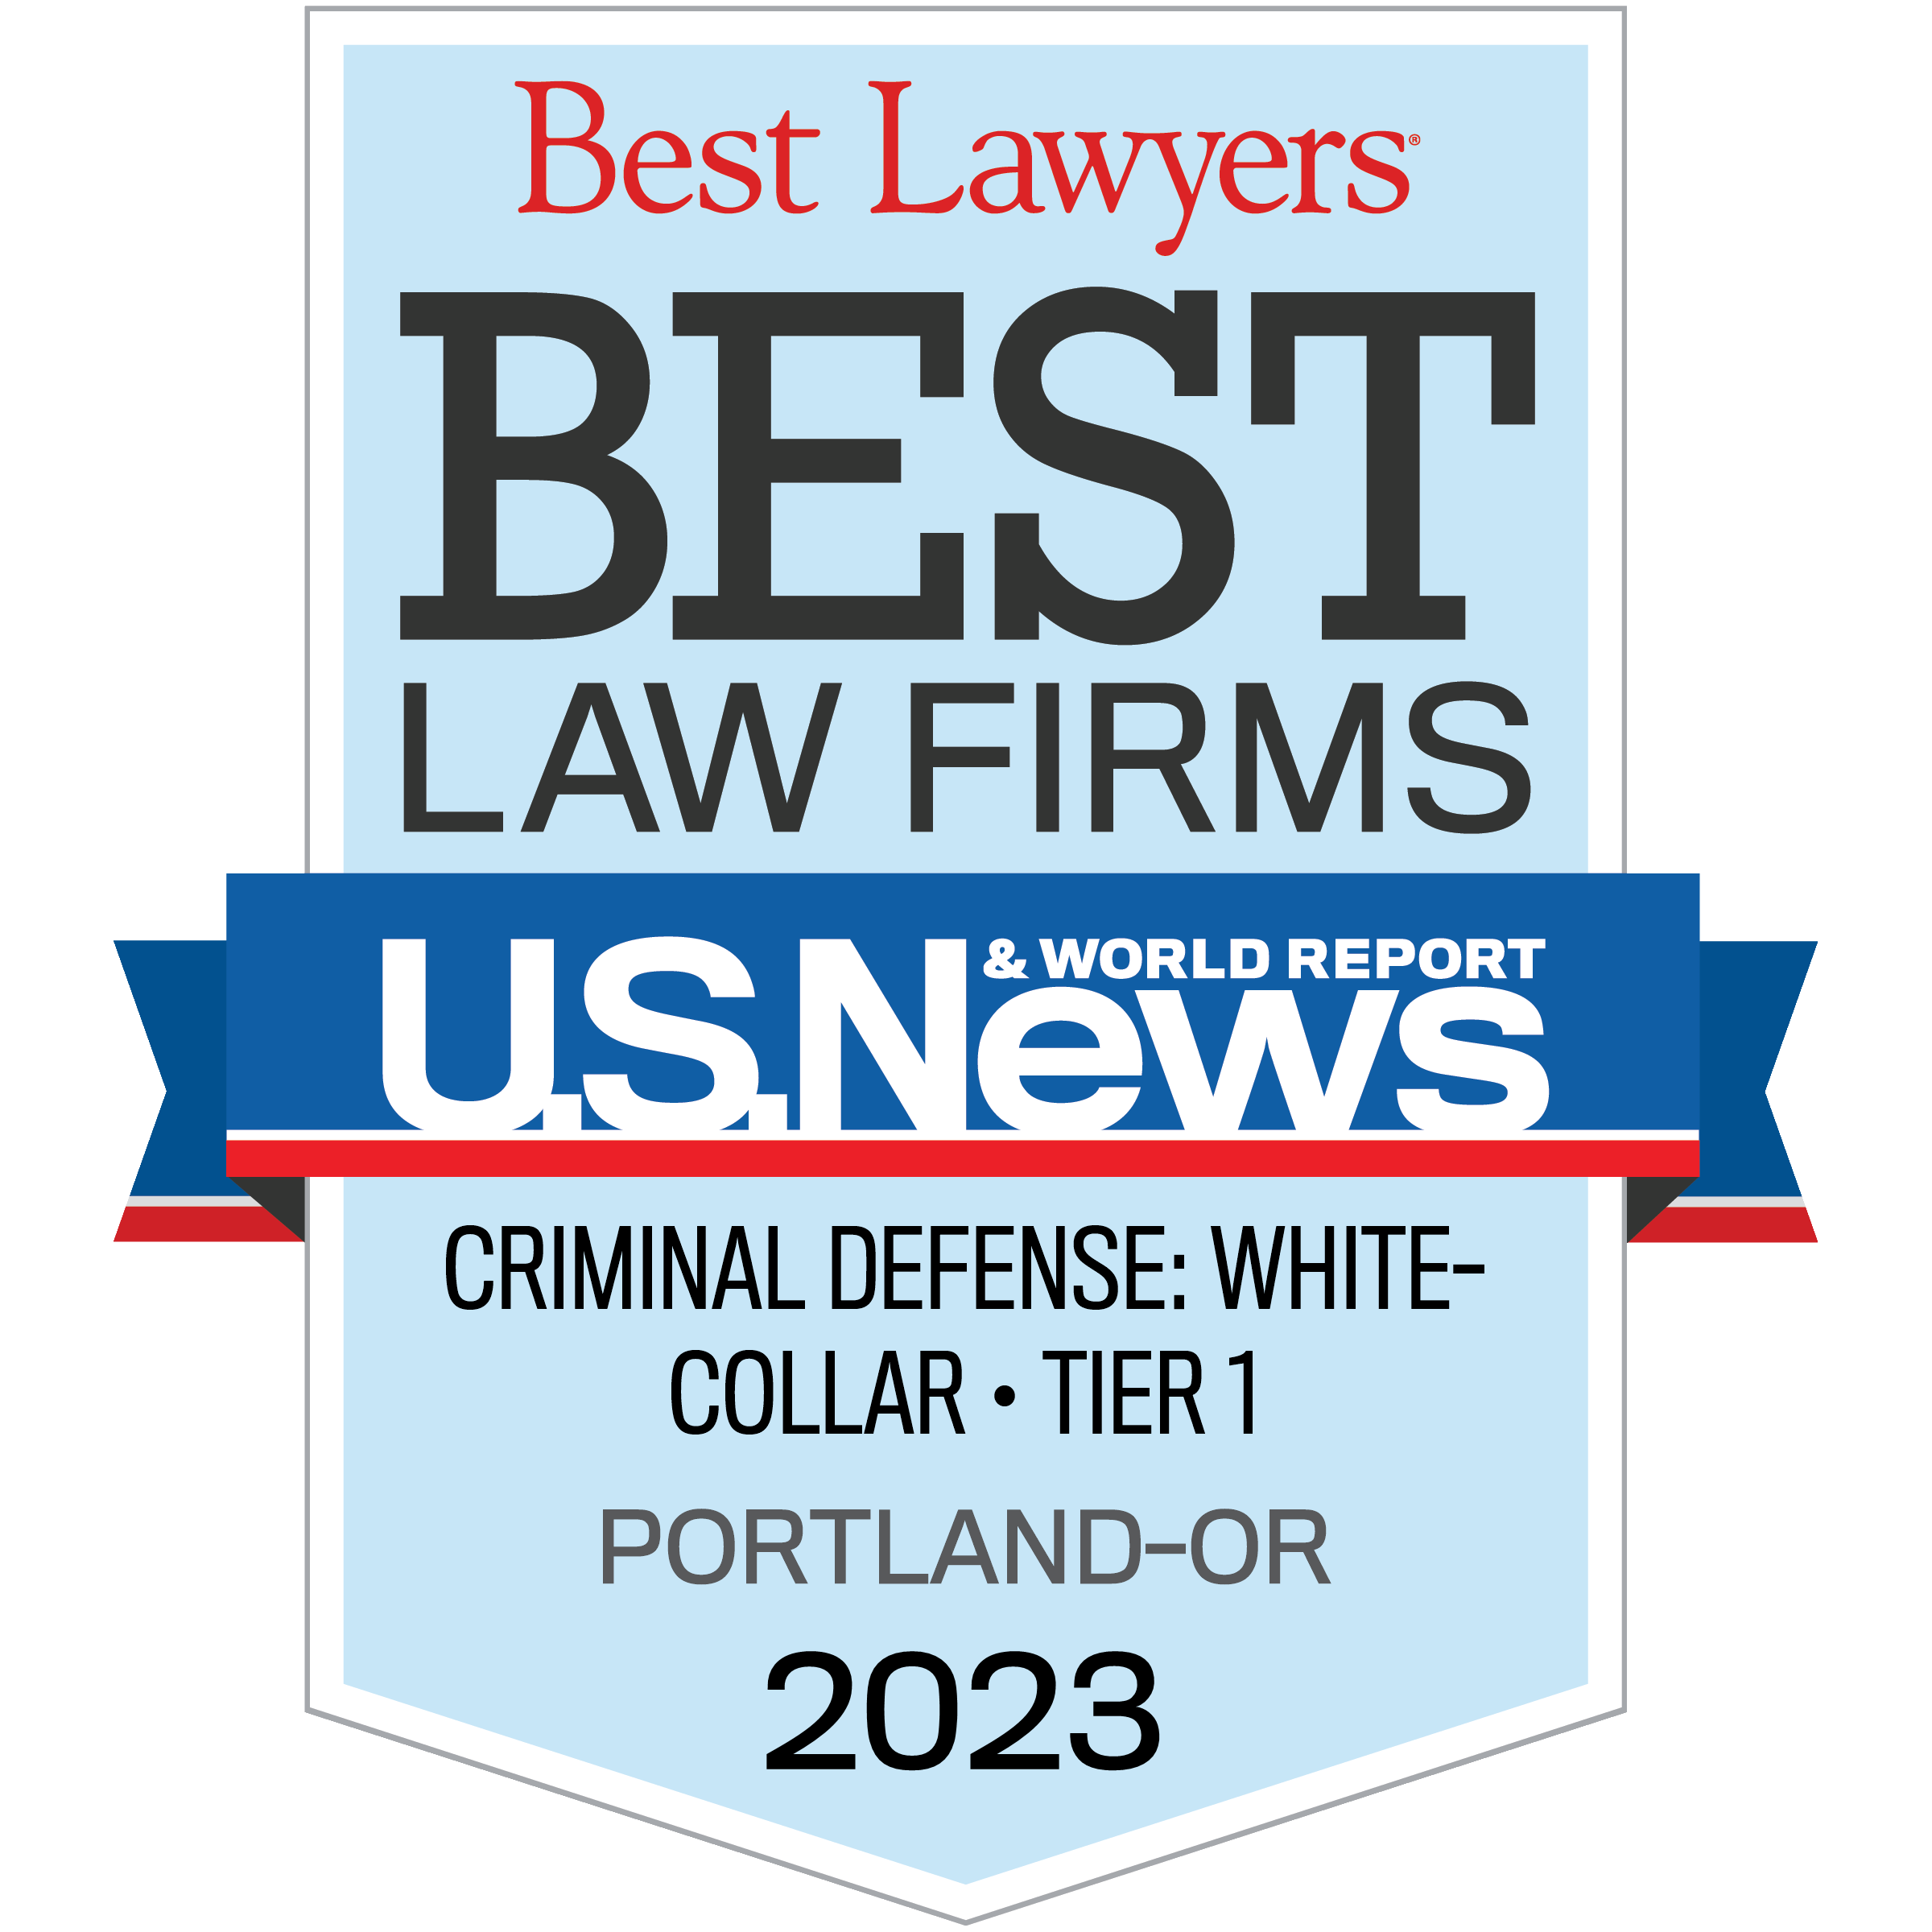 2022 Best Law Firms Tier 1